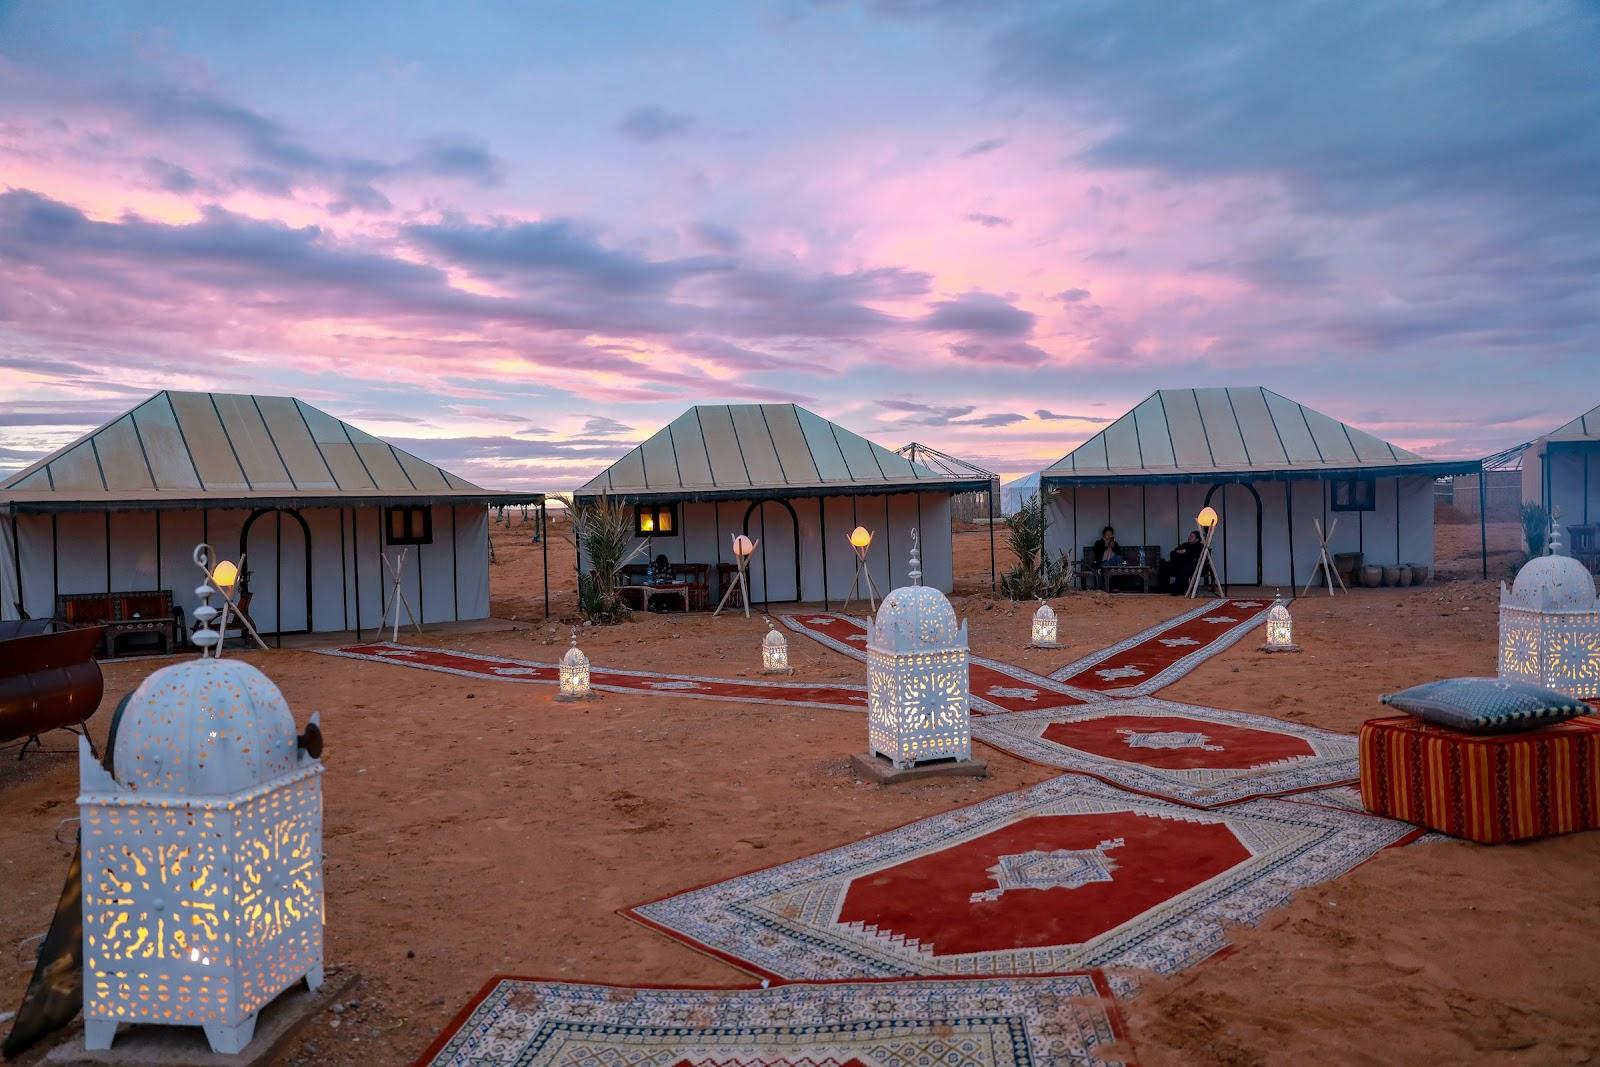 Campsite in the Sahara Desert.